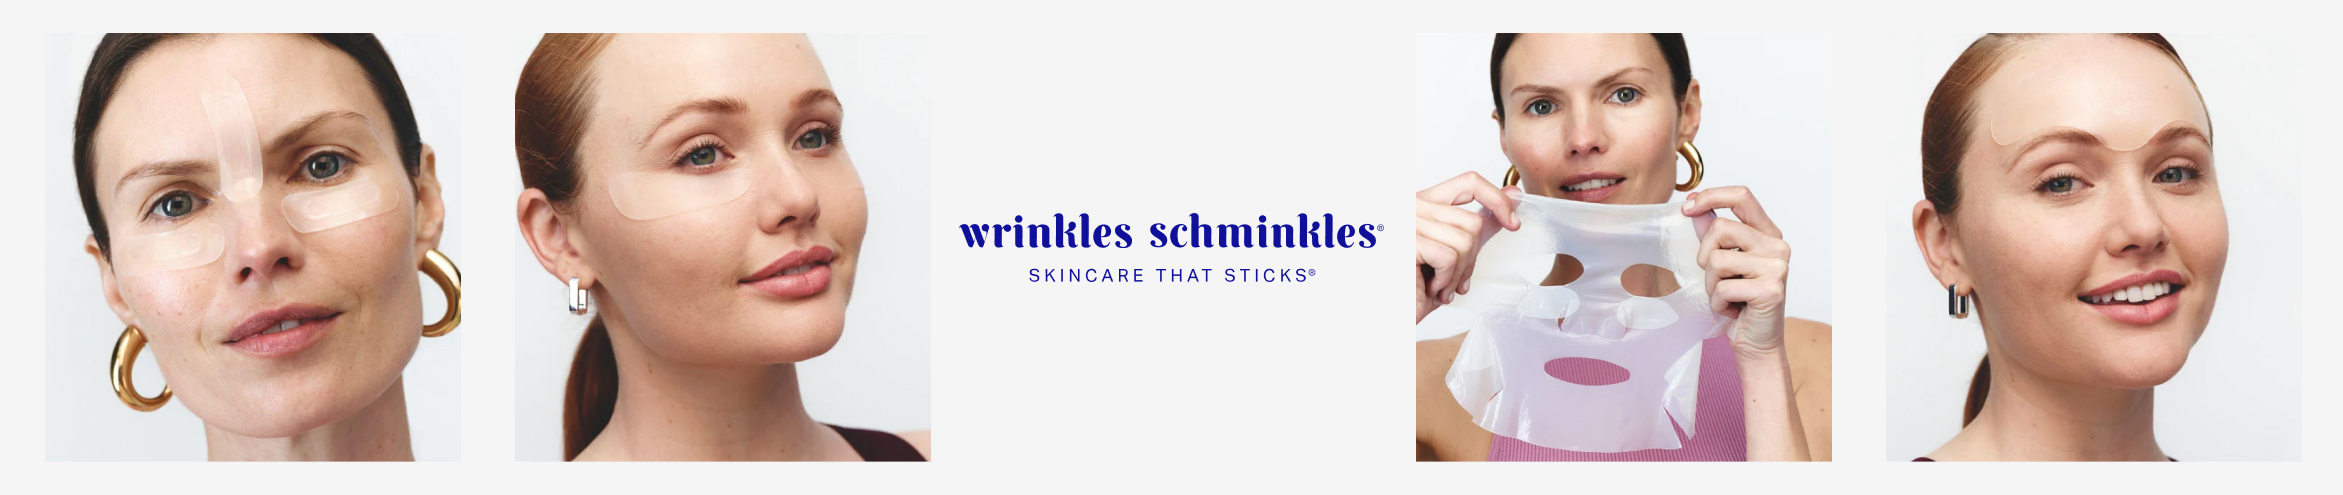 Wrinkles Schminkles - Skin Care